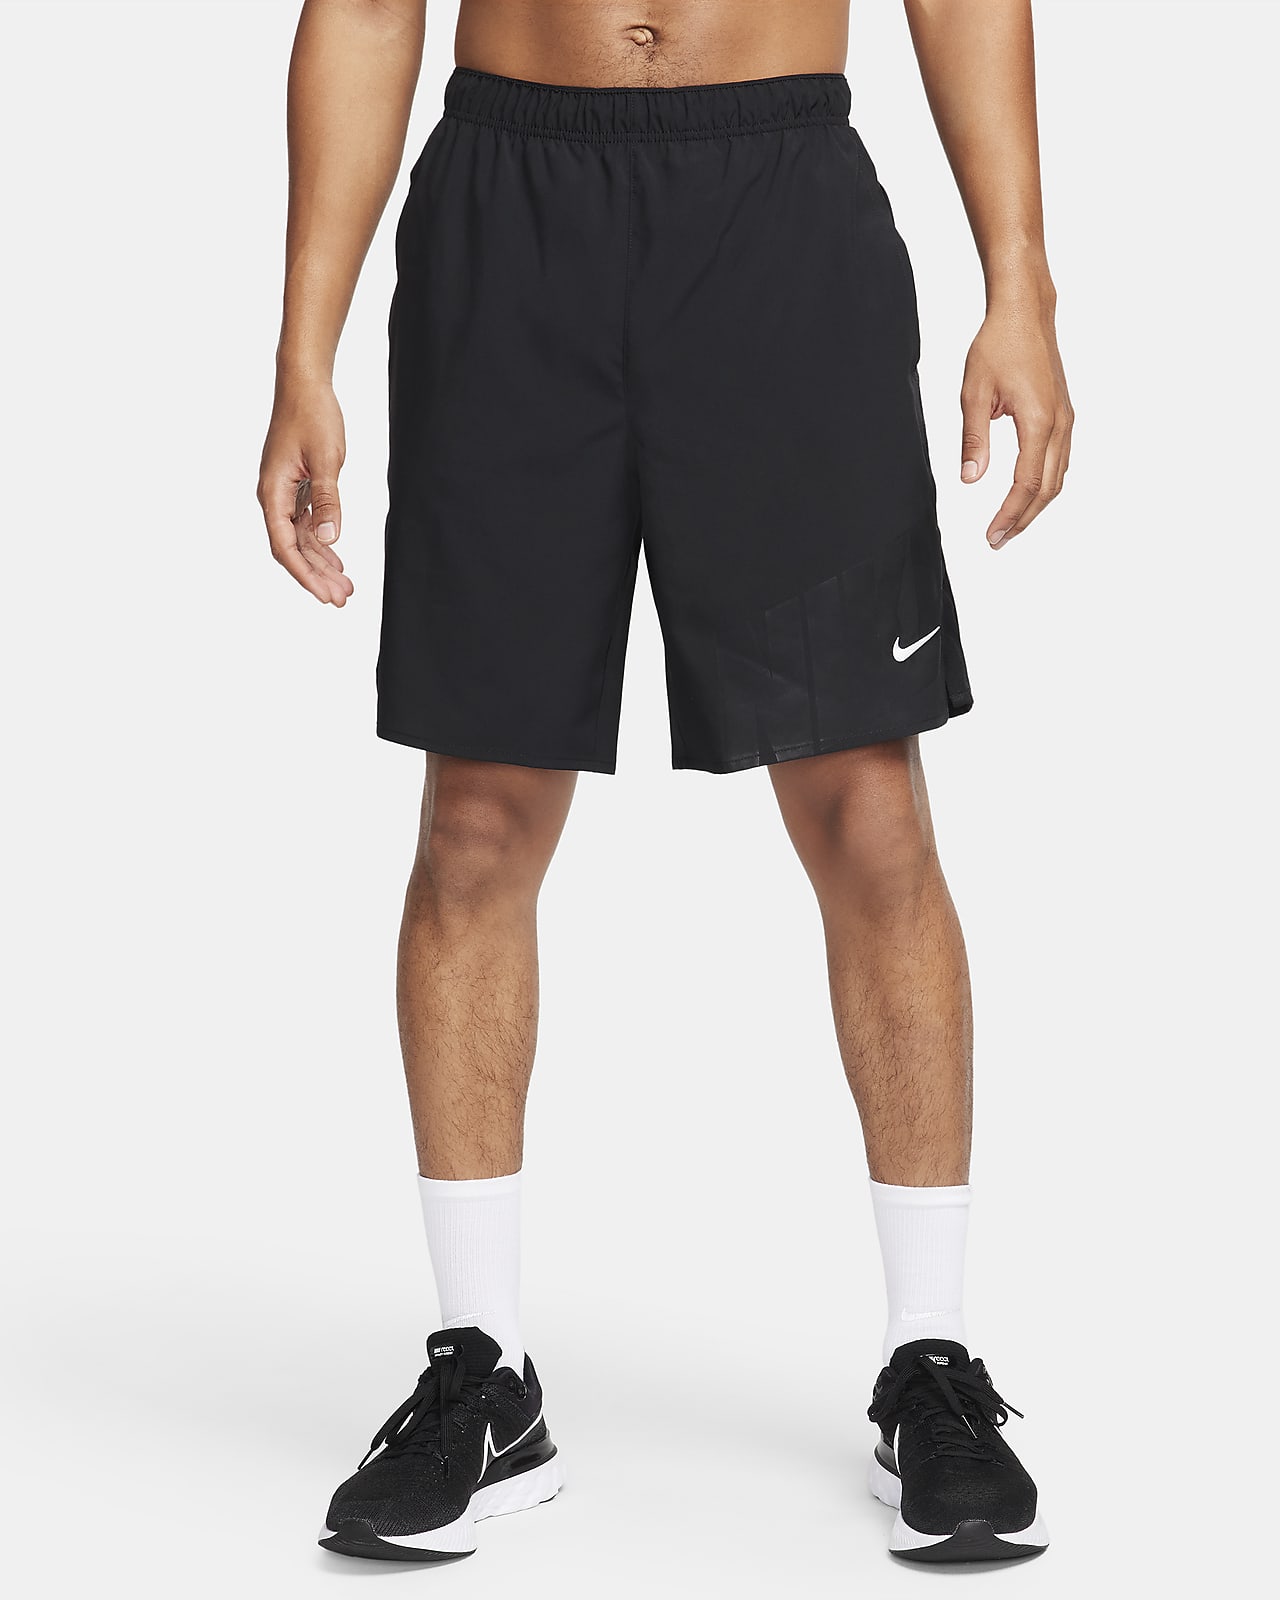 Shorts da running Dri-FIT non foderati 23 cm Nike Challenger – Uomo